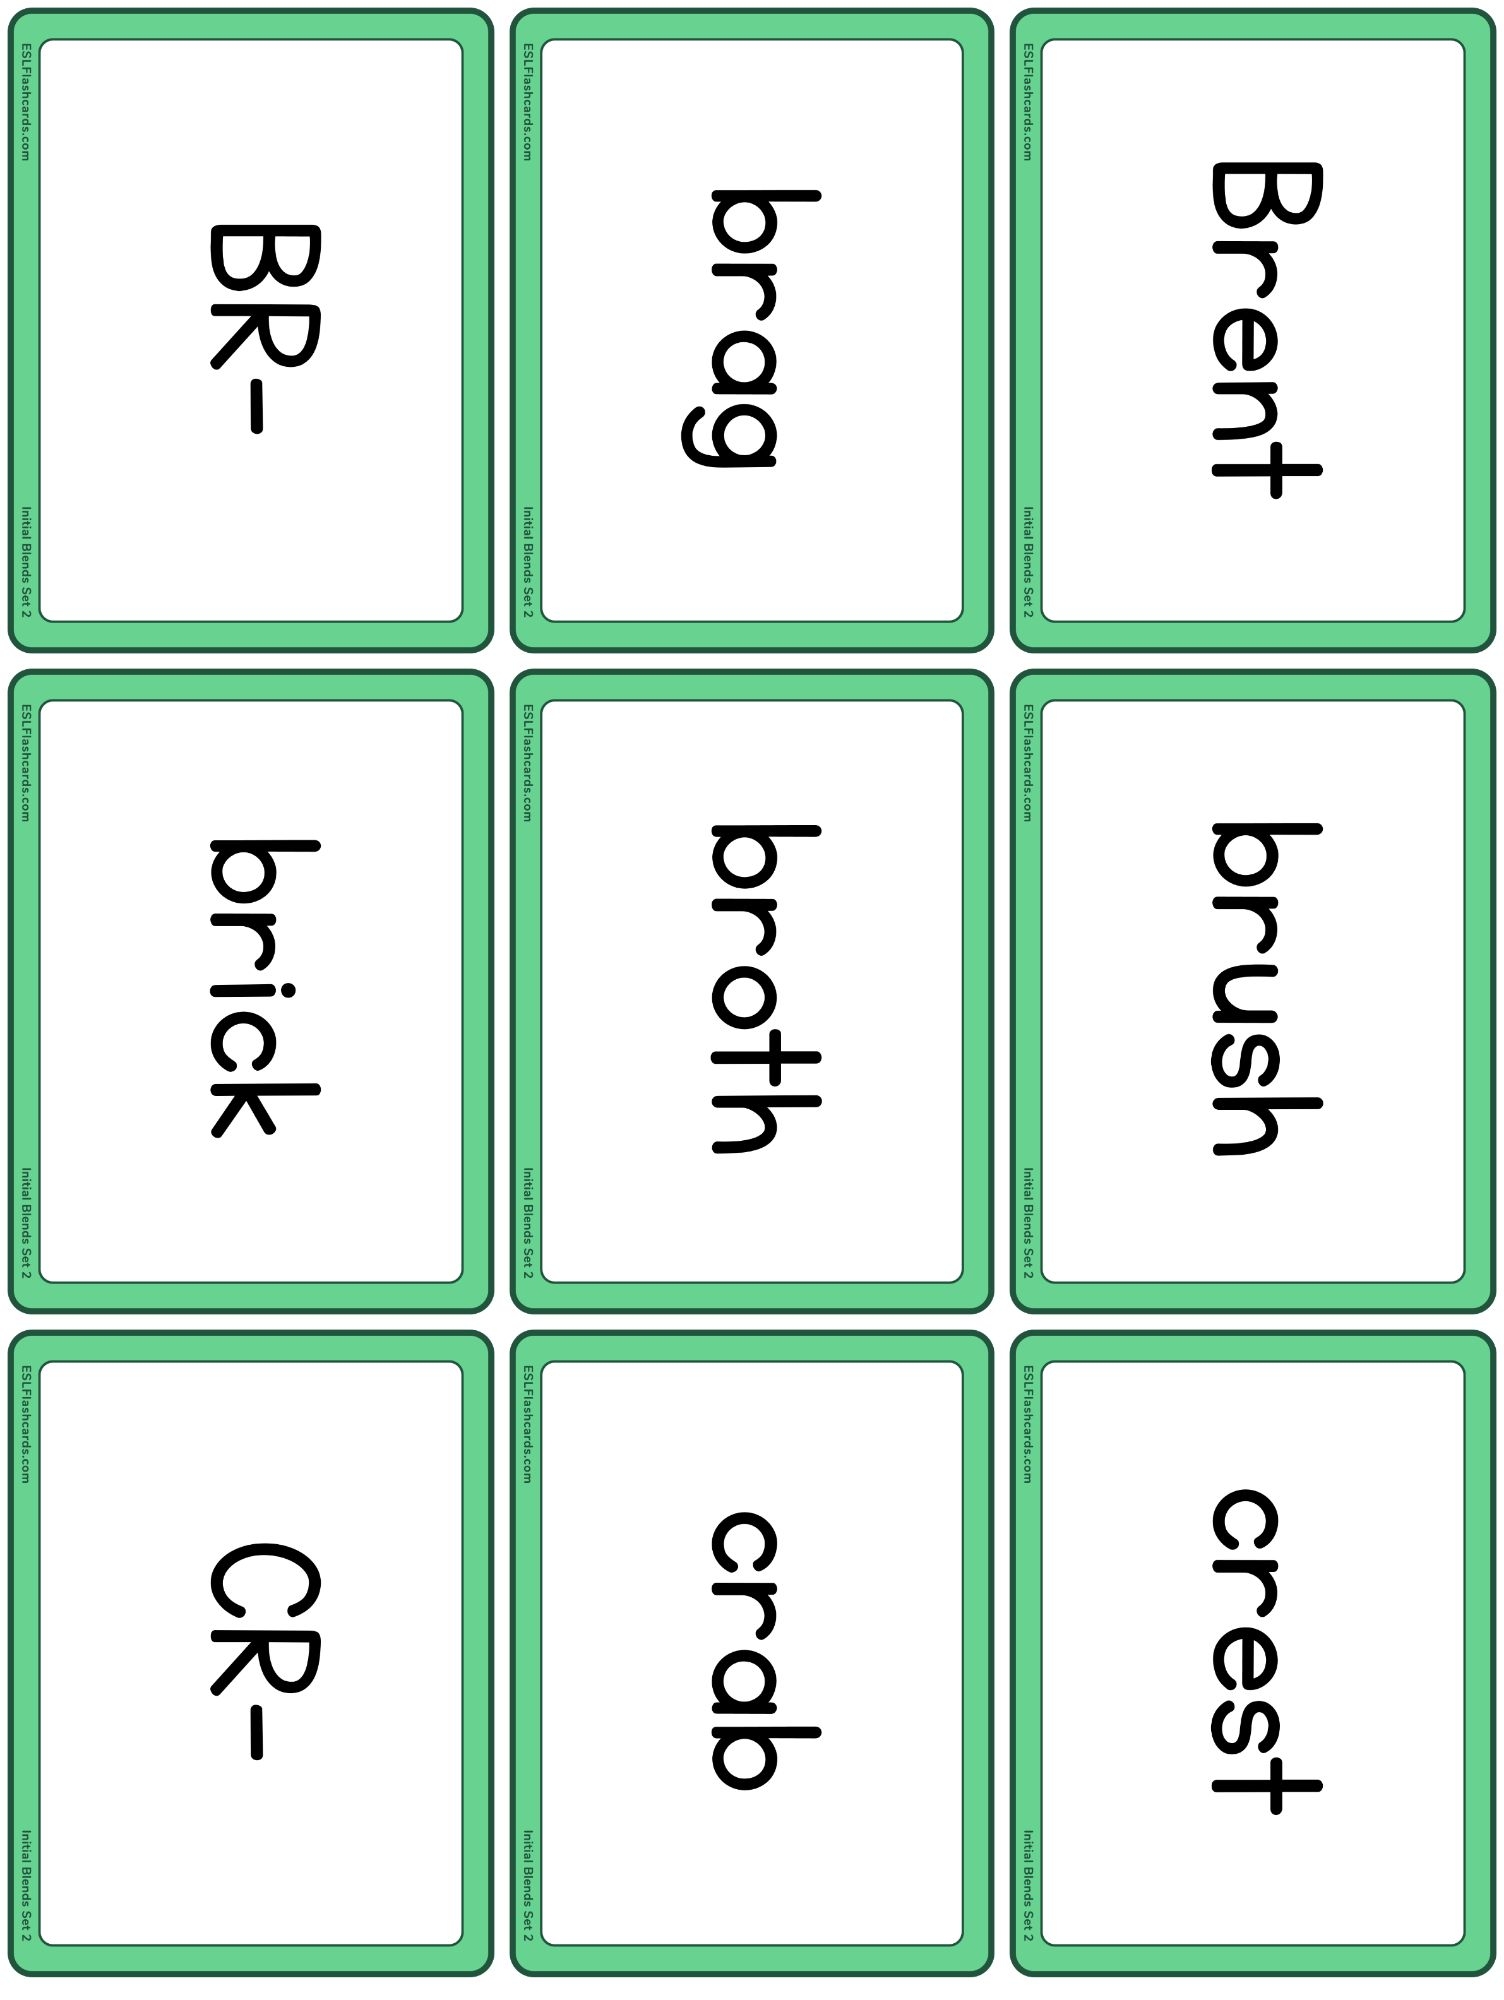 Initial Consonant Blends ESL Flashcards - Free Printable Blending Cards